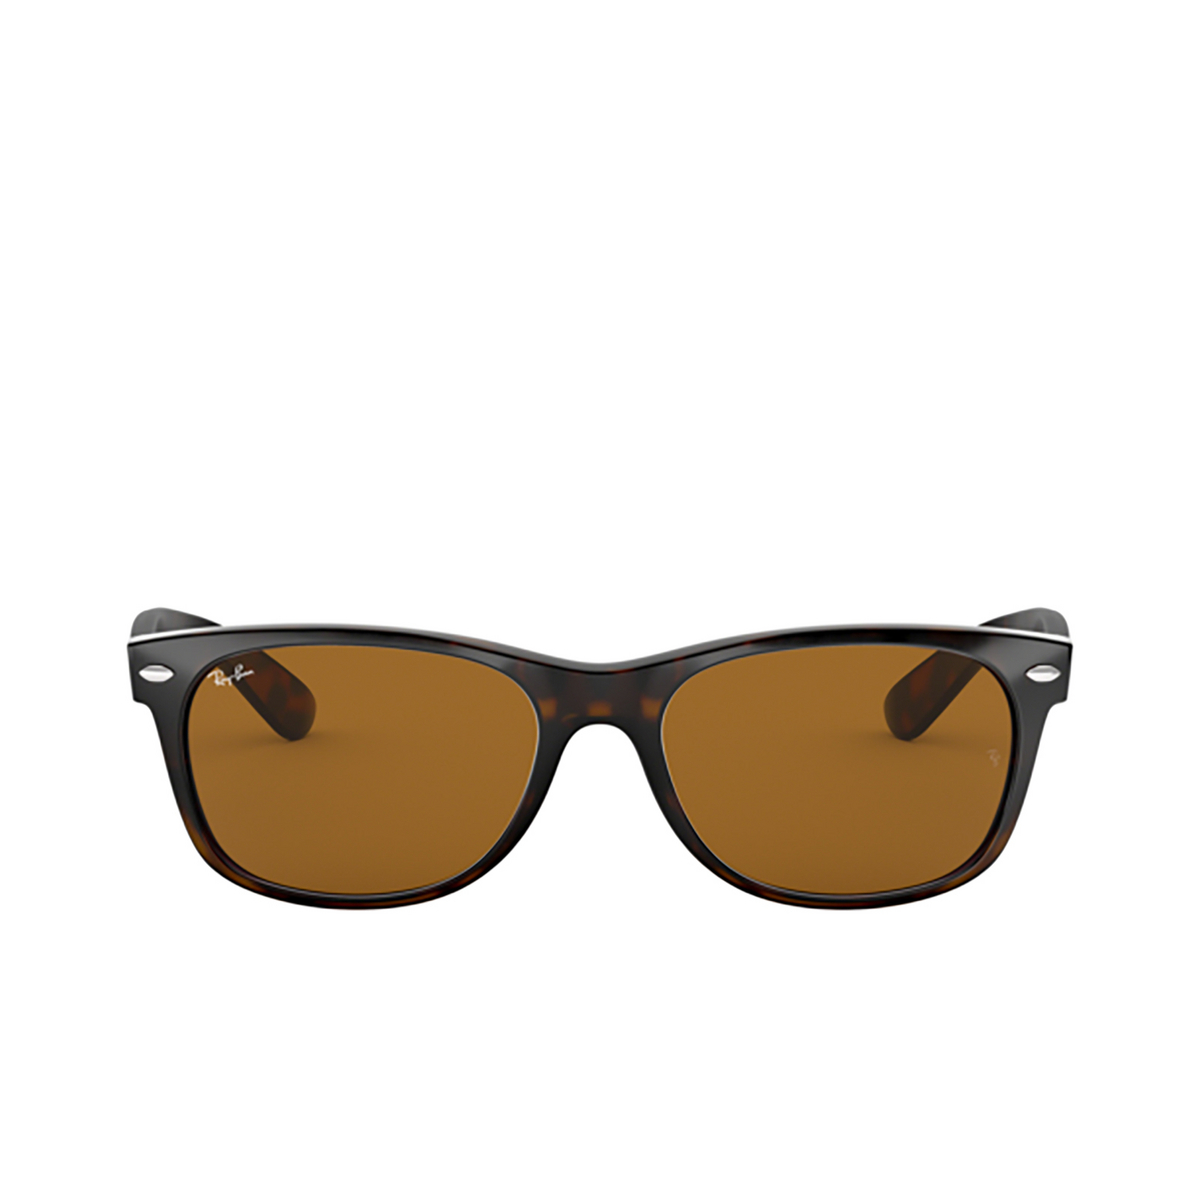 Ray-Ban NEW WAYFARER Sunglasses 710 Light Havana - front view